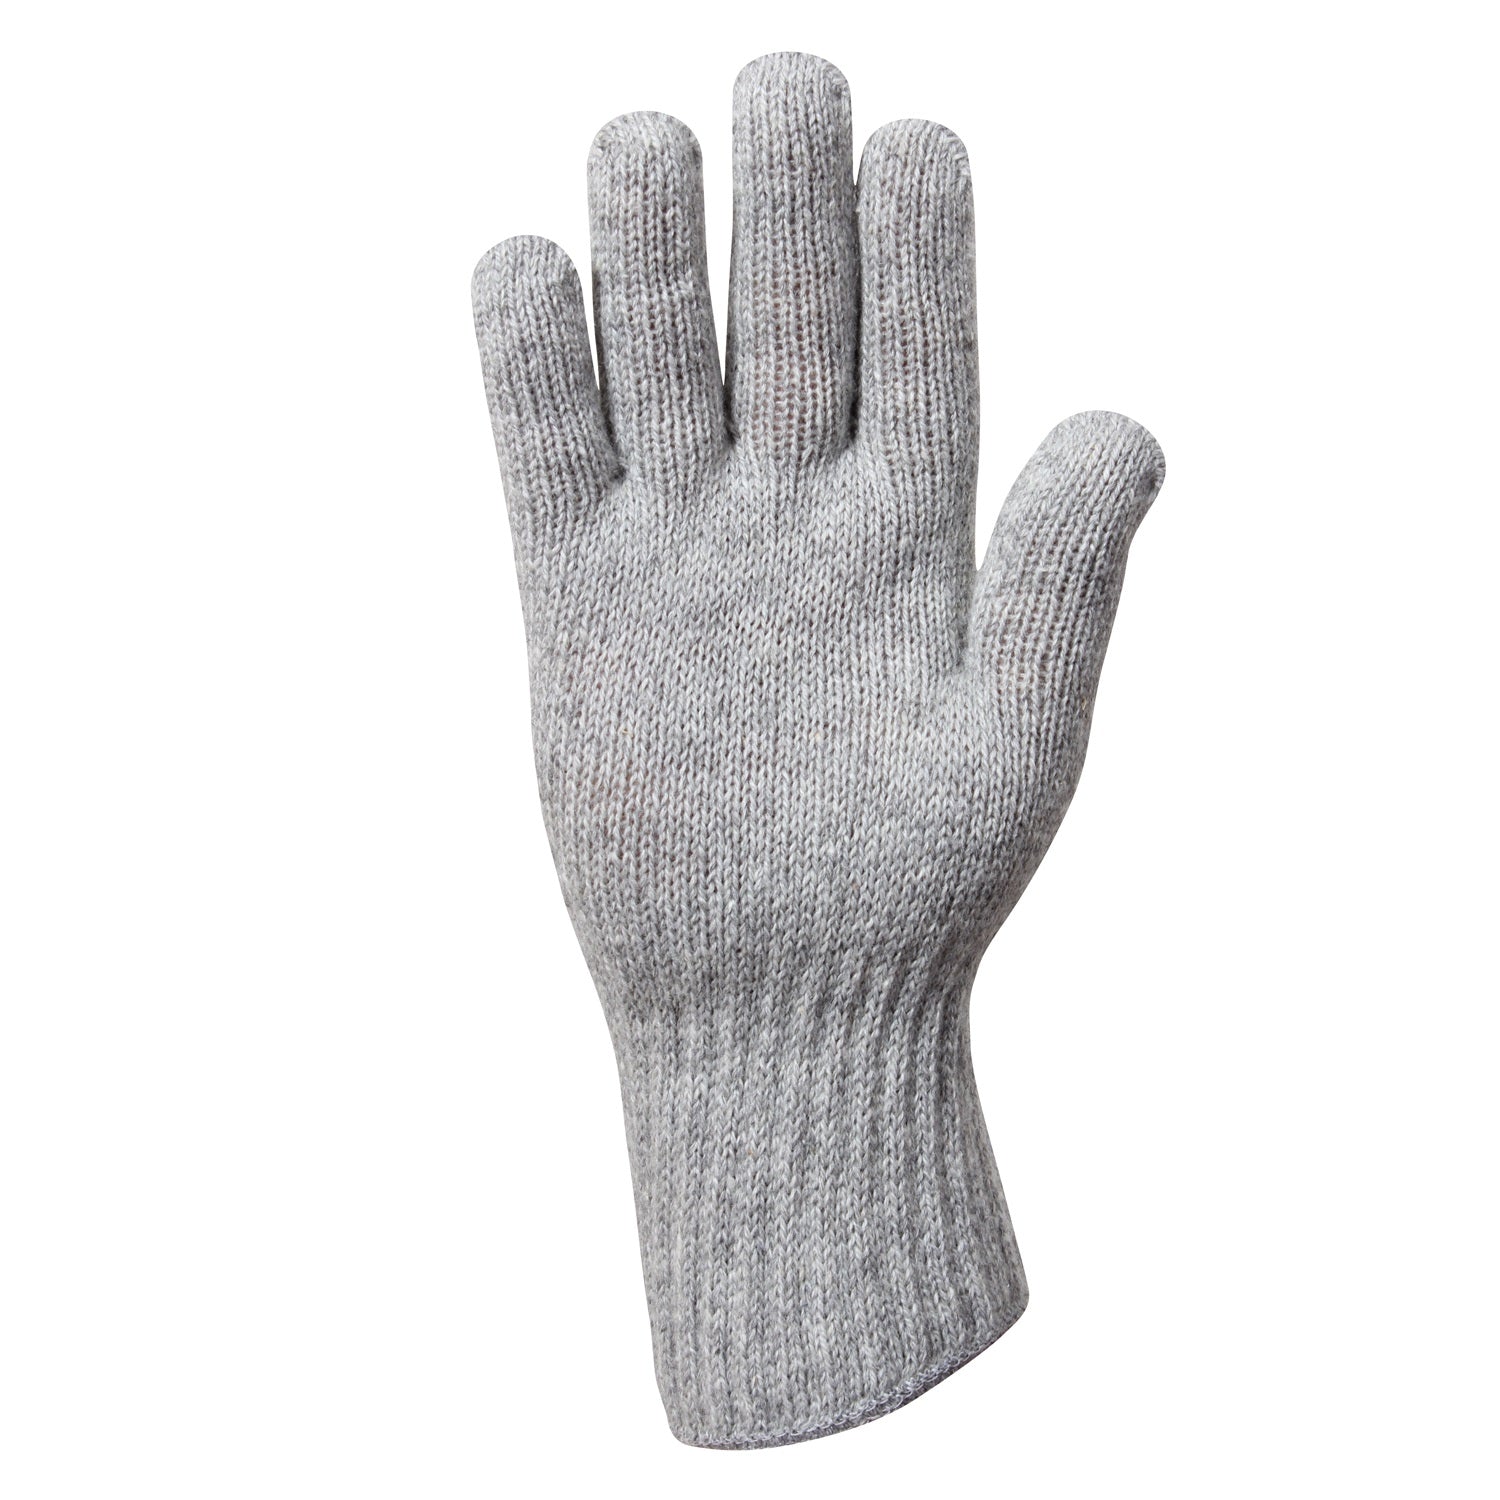 Rothco G.I. Glove Liners Grey